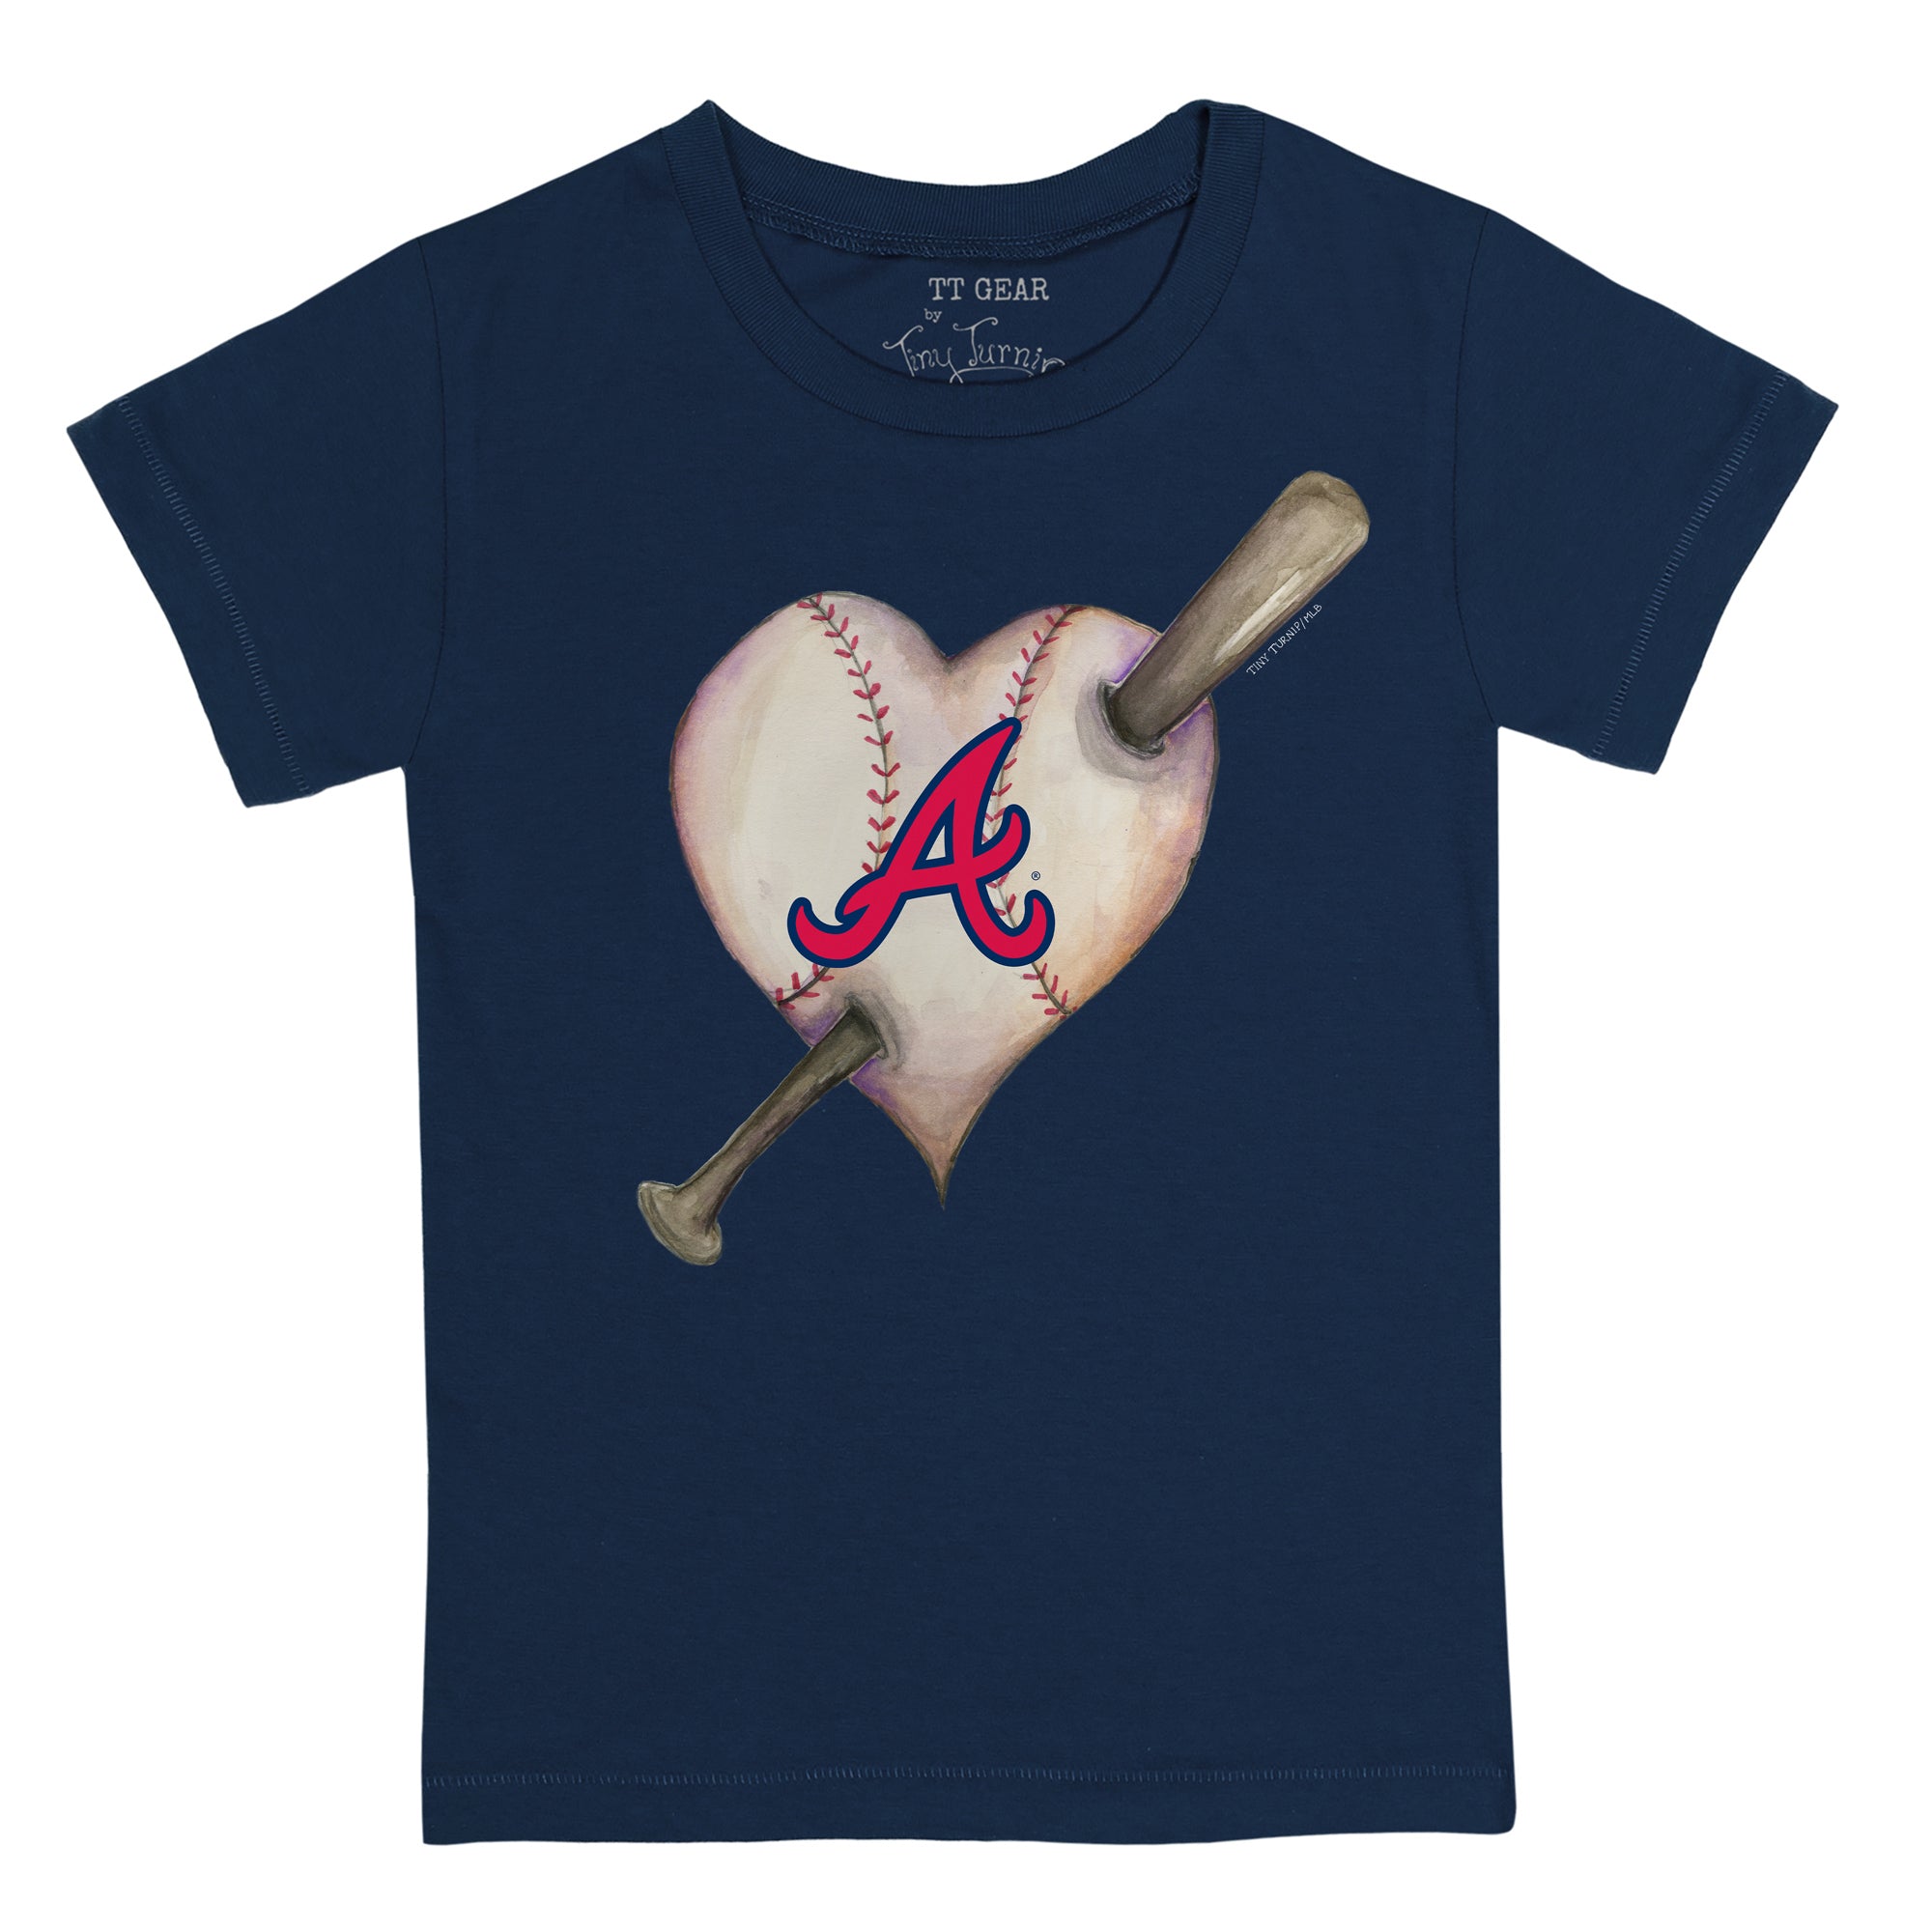 Tiny Turnip Atlanta Braves Heart Bat Tee Shirt Women's 2XL / Navy Blue